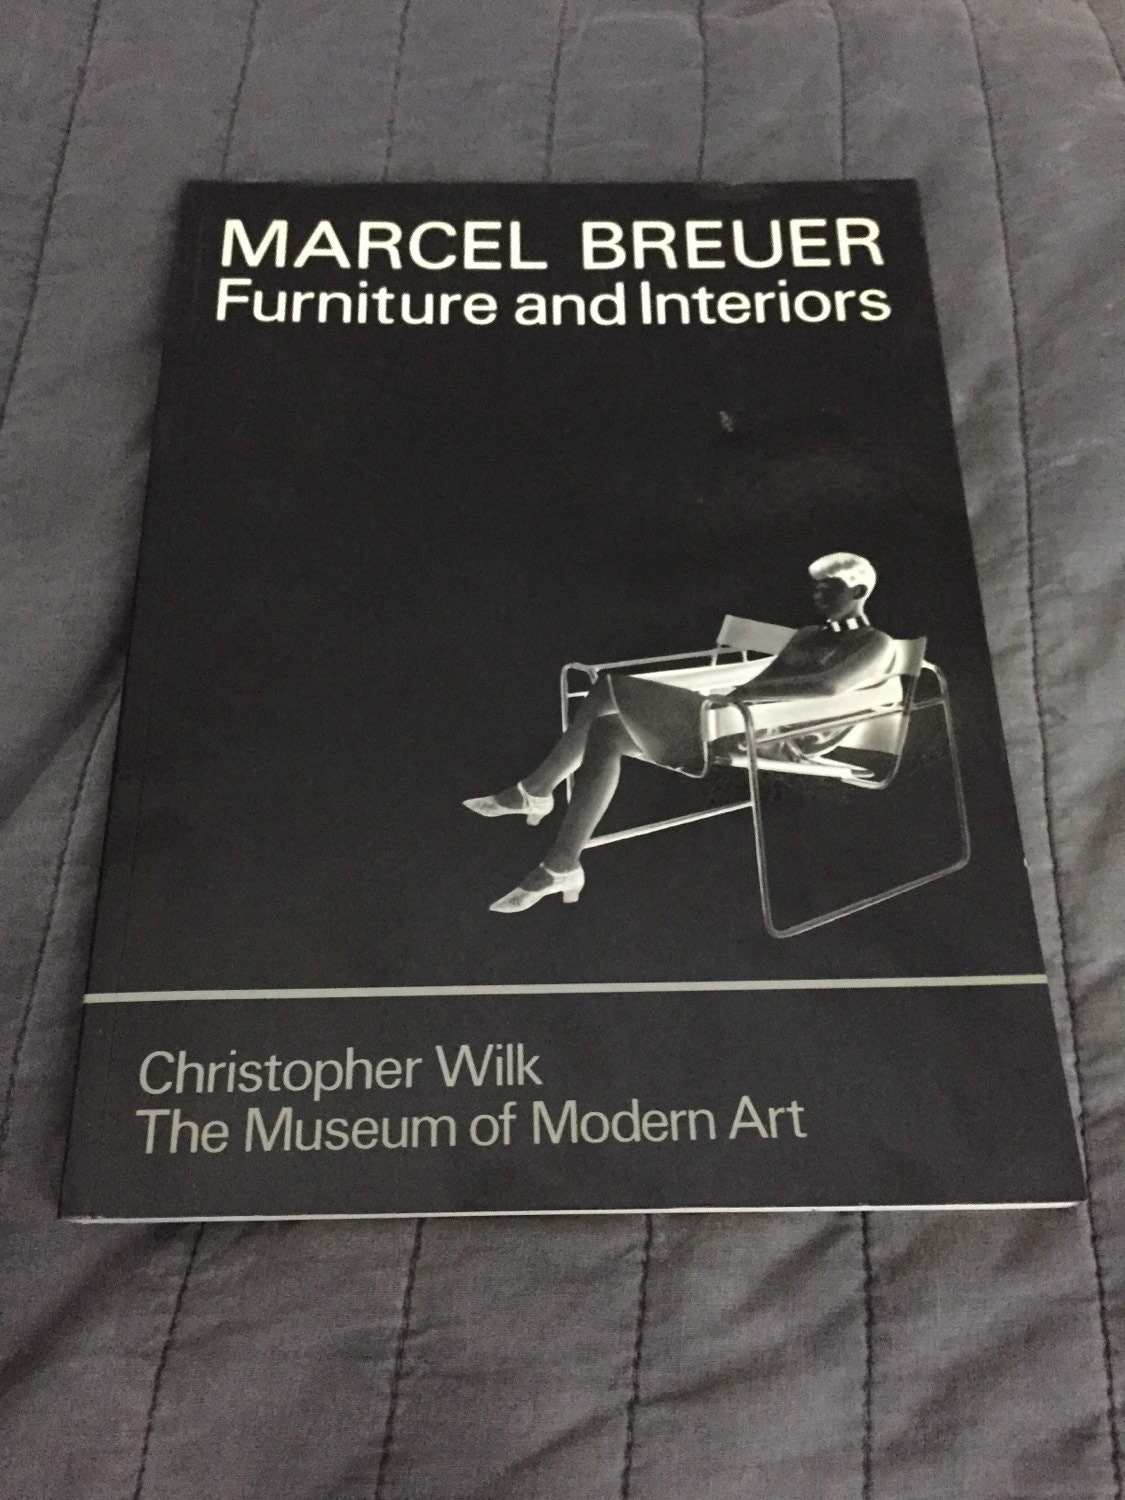 Book Marcel Breuer Furniture Amp Interiors By Christopher Wilk